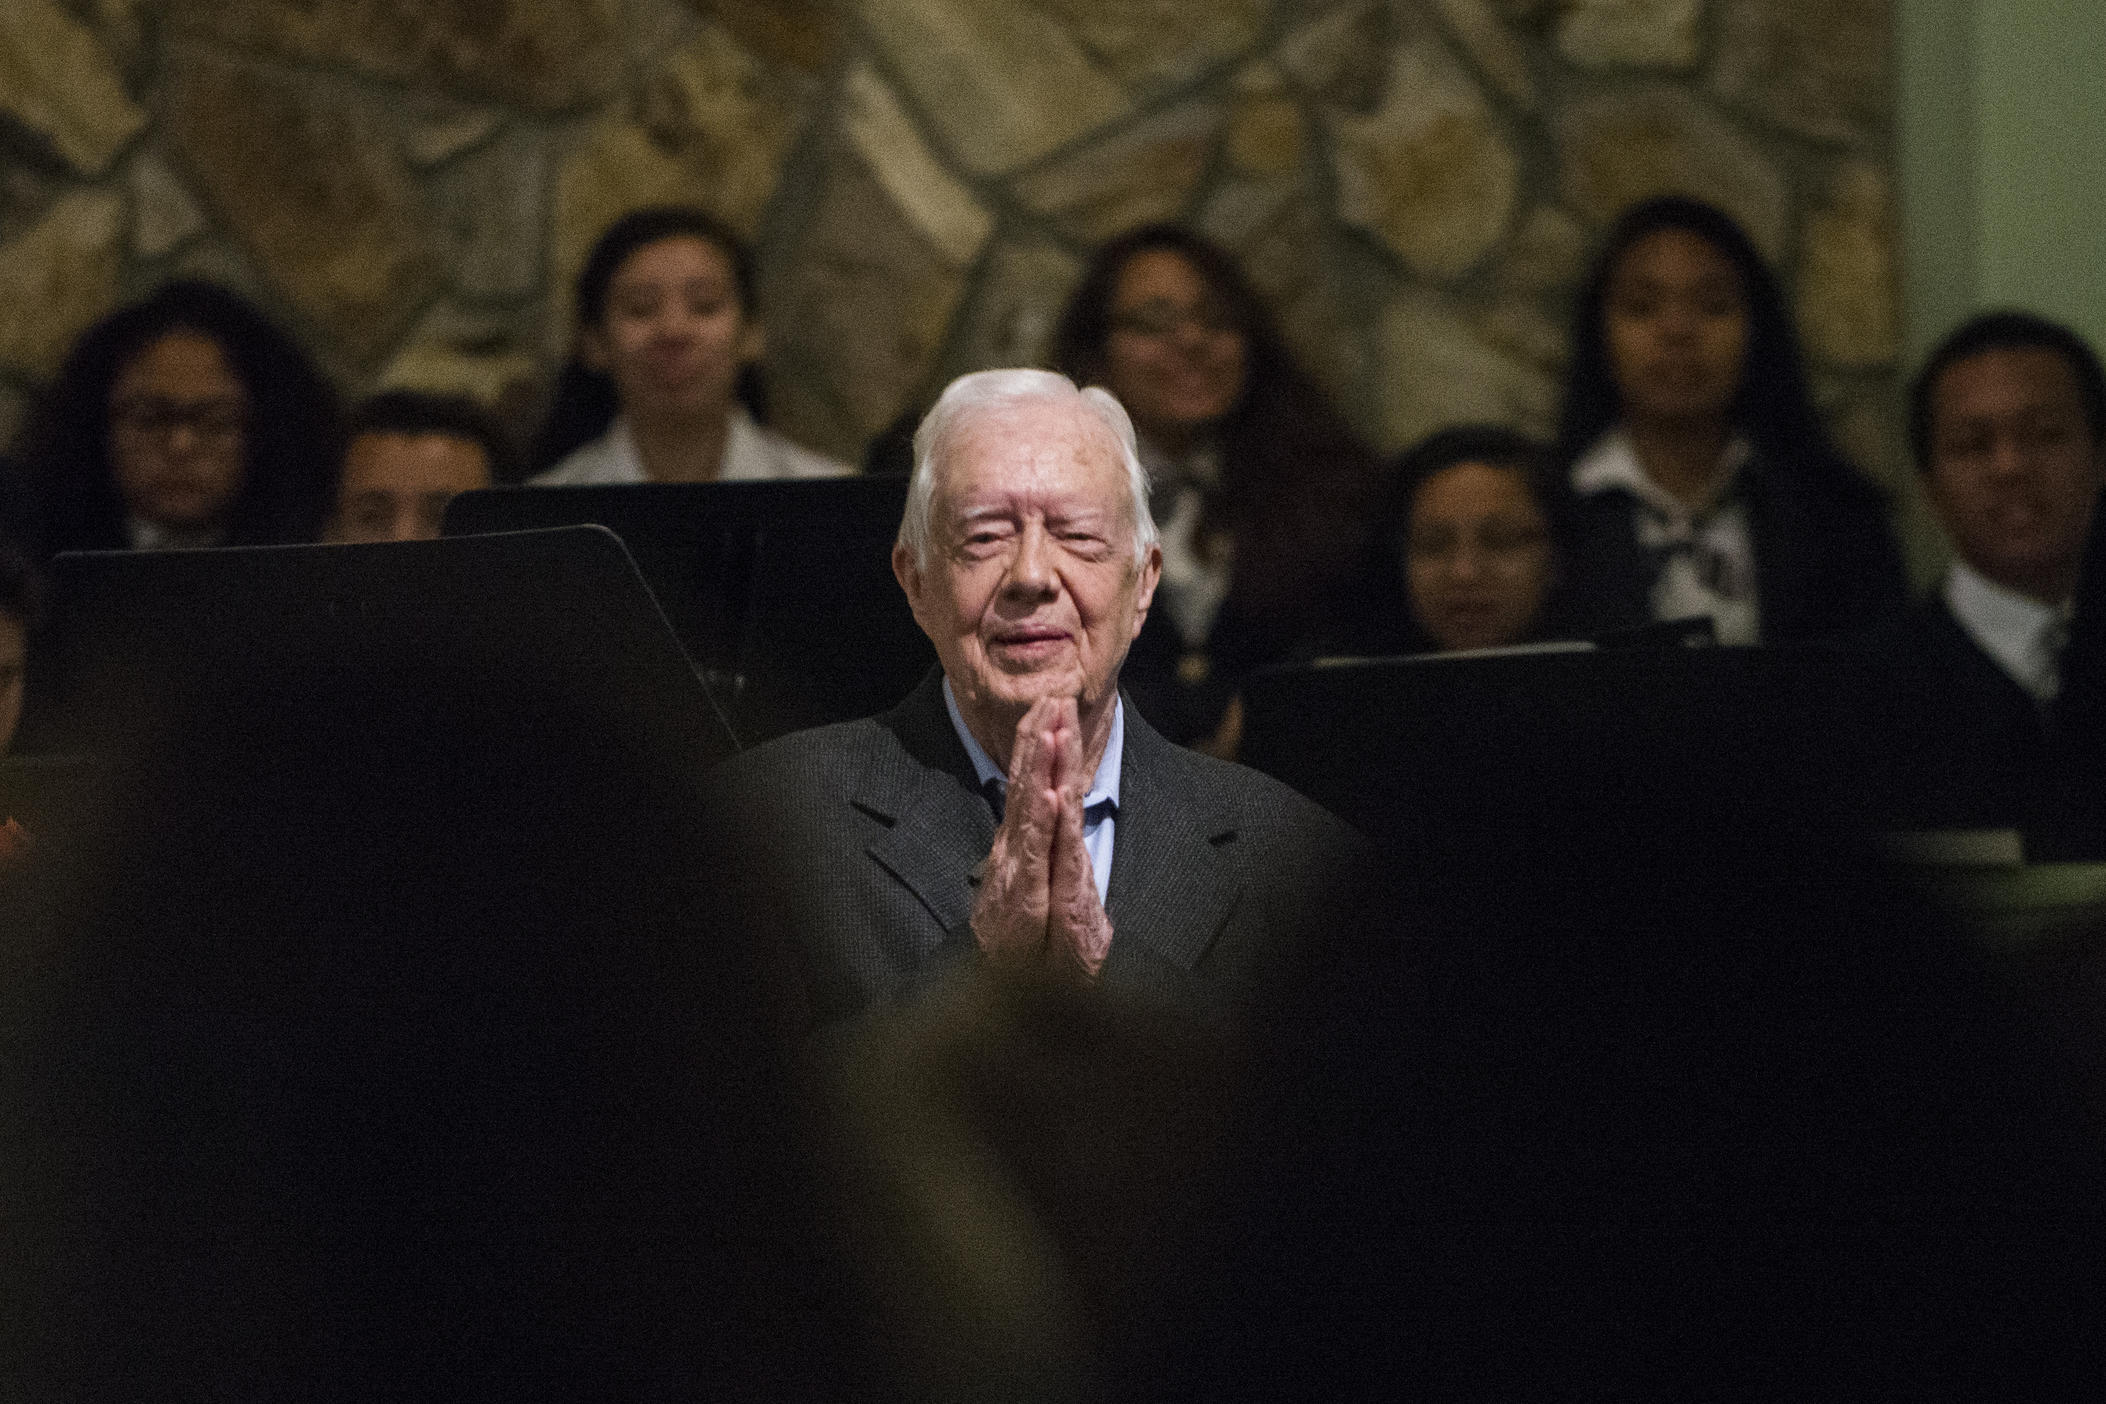 Former President Jimmy Carter at Maranatha Baptist Church in 2015.